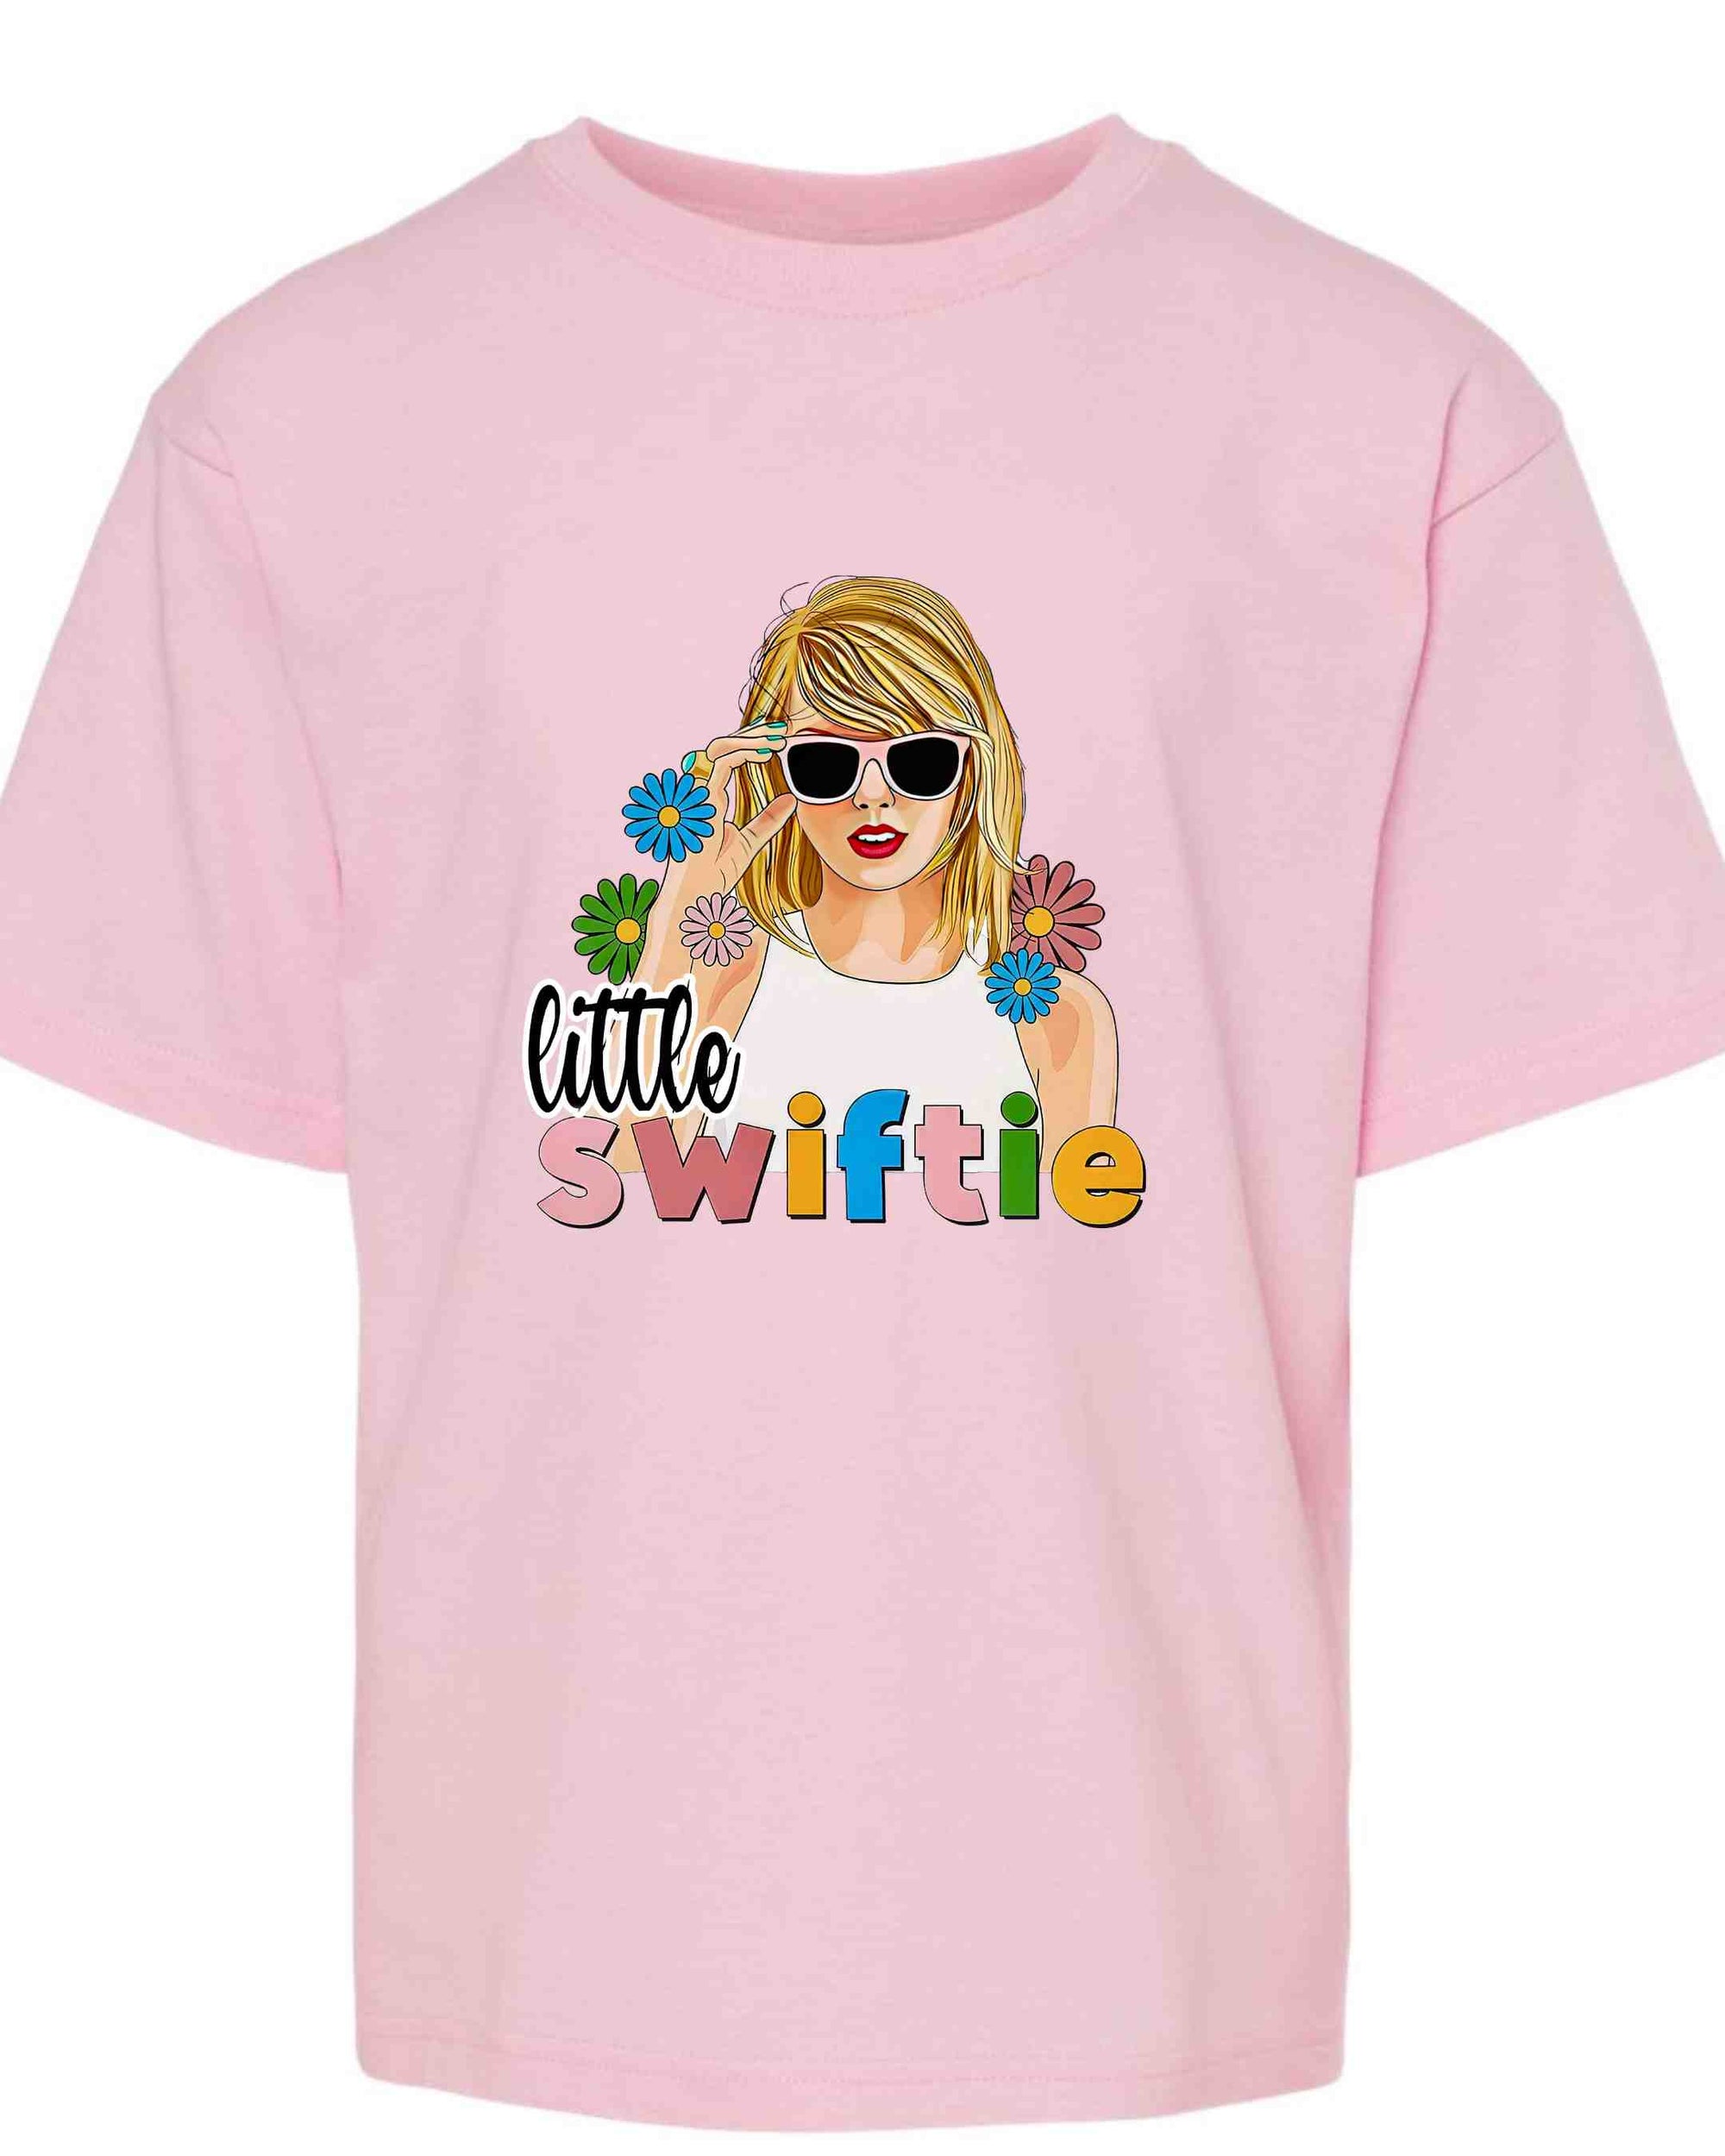 Little Swiftie YOUTH Pink Shirt